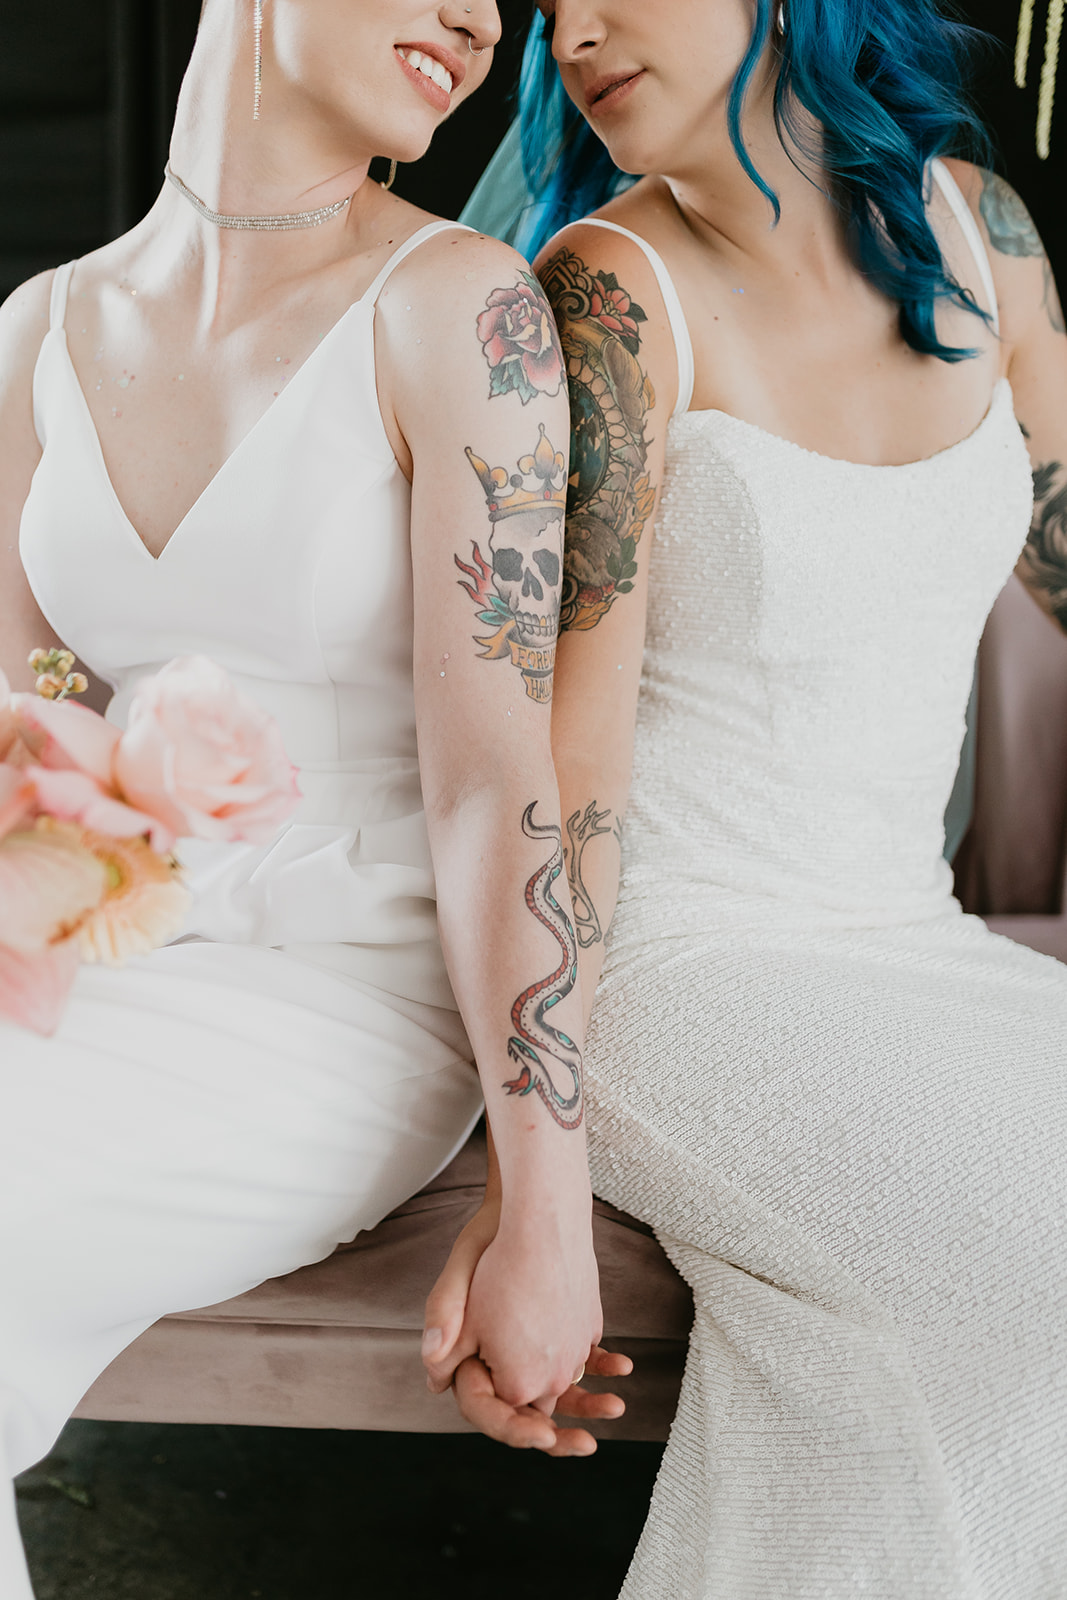 Tattooed brides hold hands